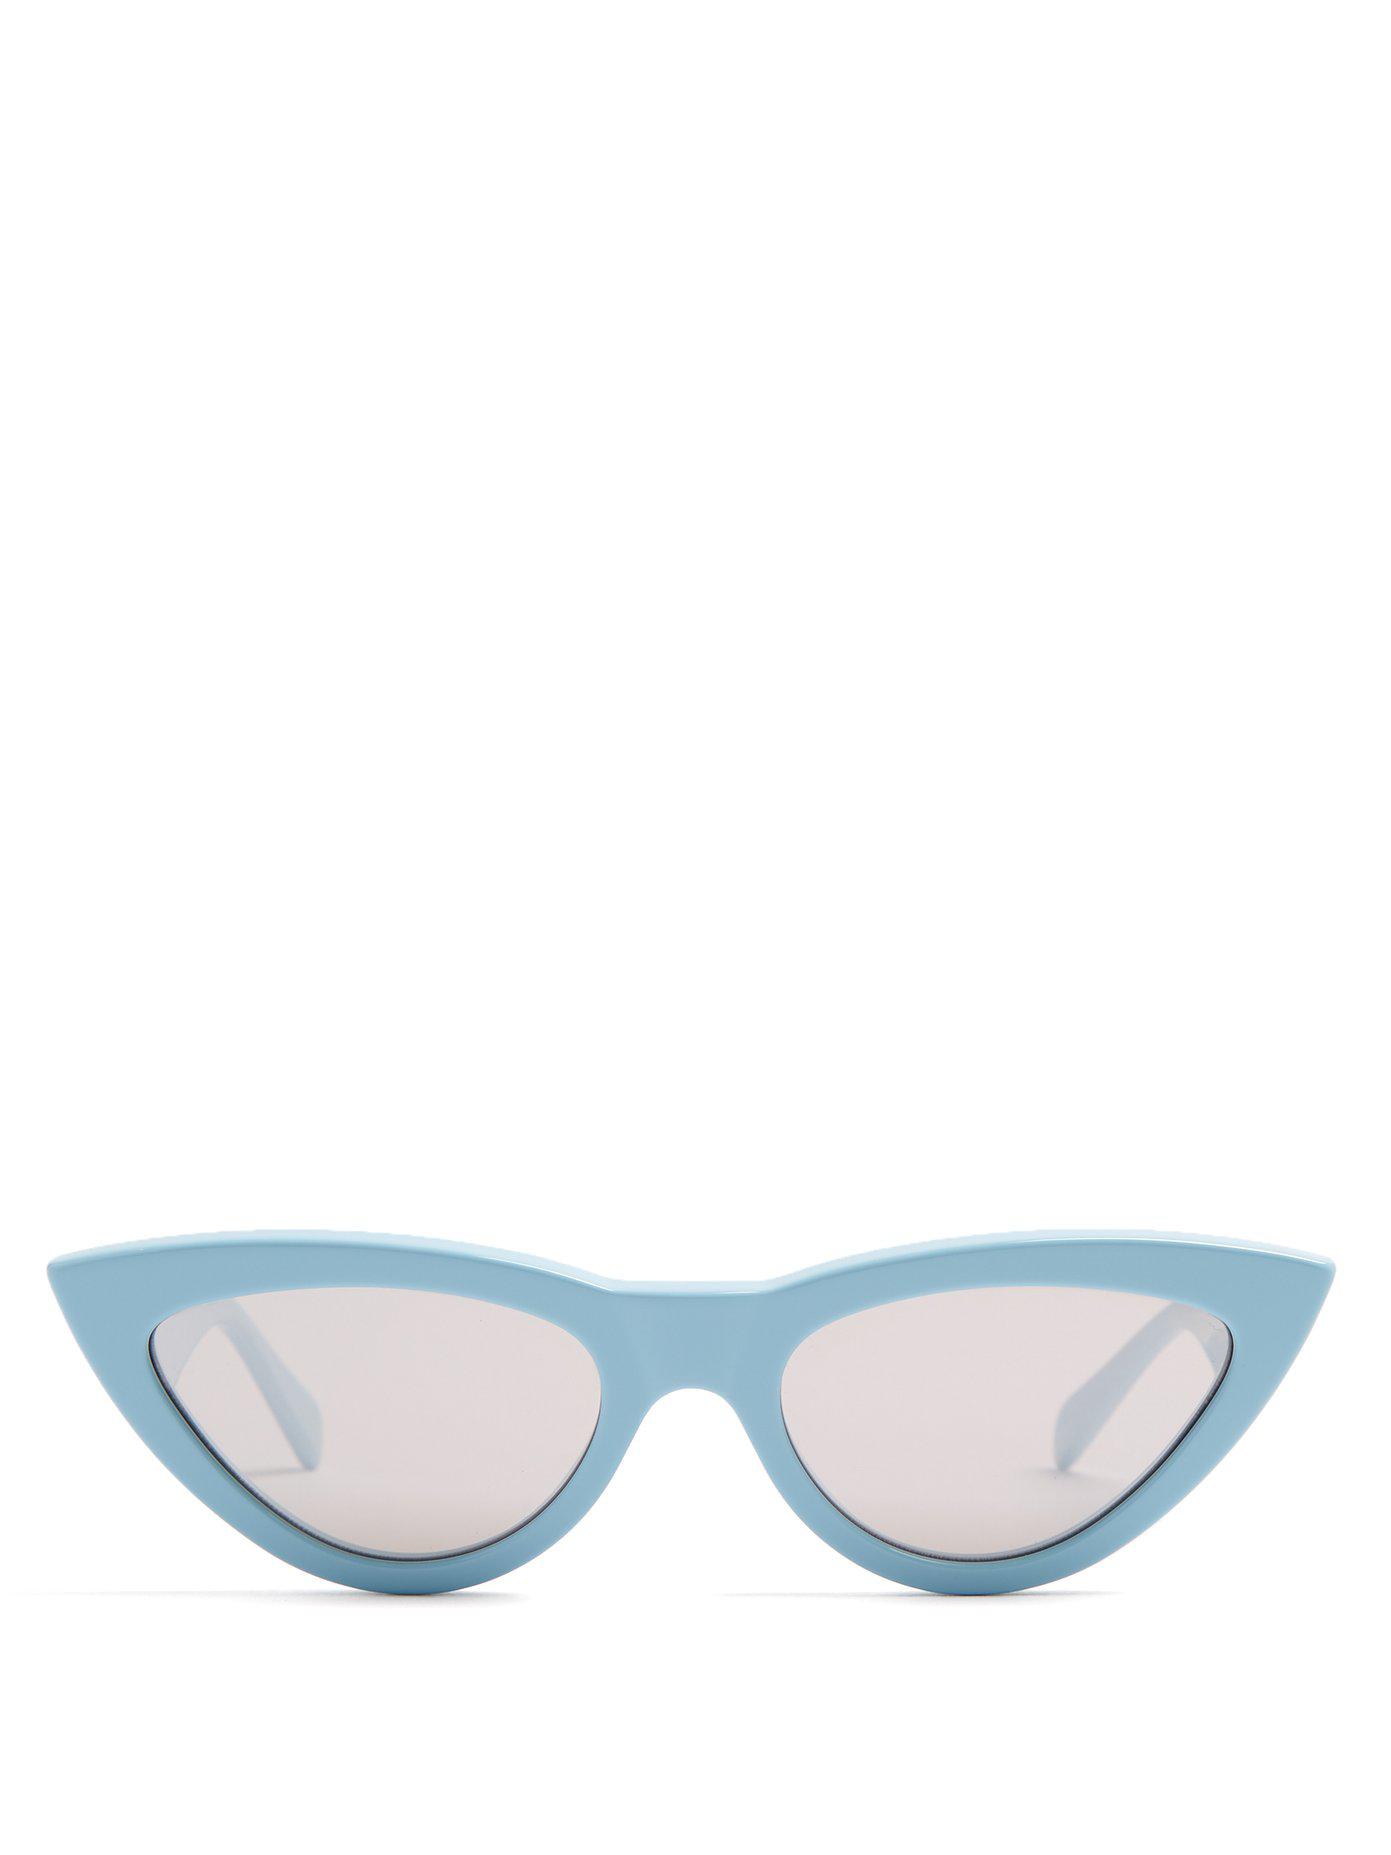 Celine Cat-eye Acetate Sunglasses in Blue | Lyst